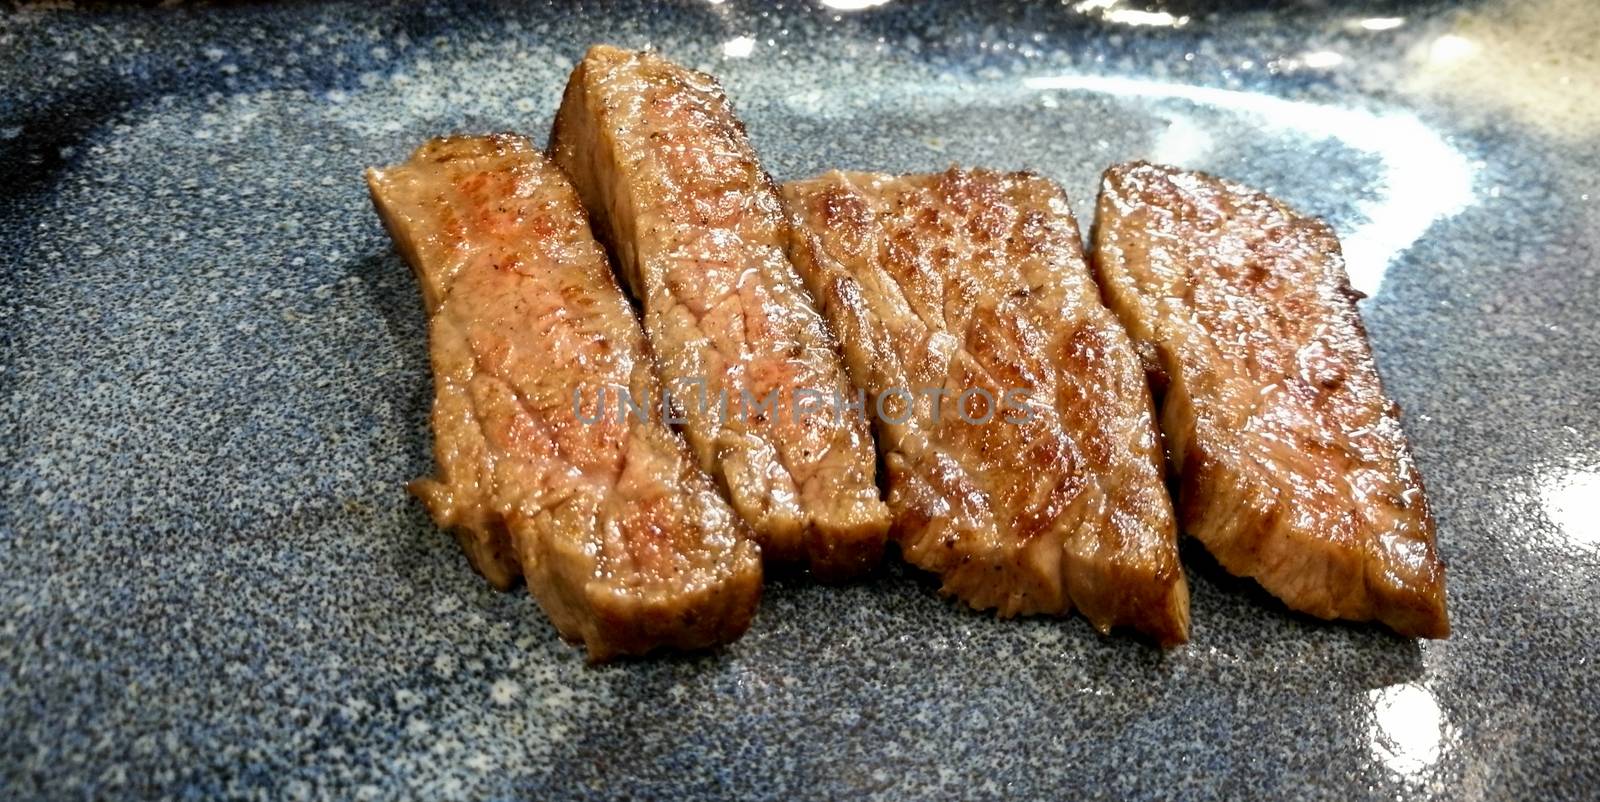 Steak Premium legendary top grade Kobe matsusaka Japanese beef by eyeofpaul